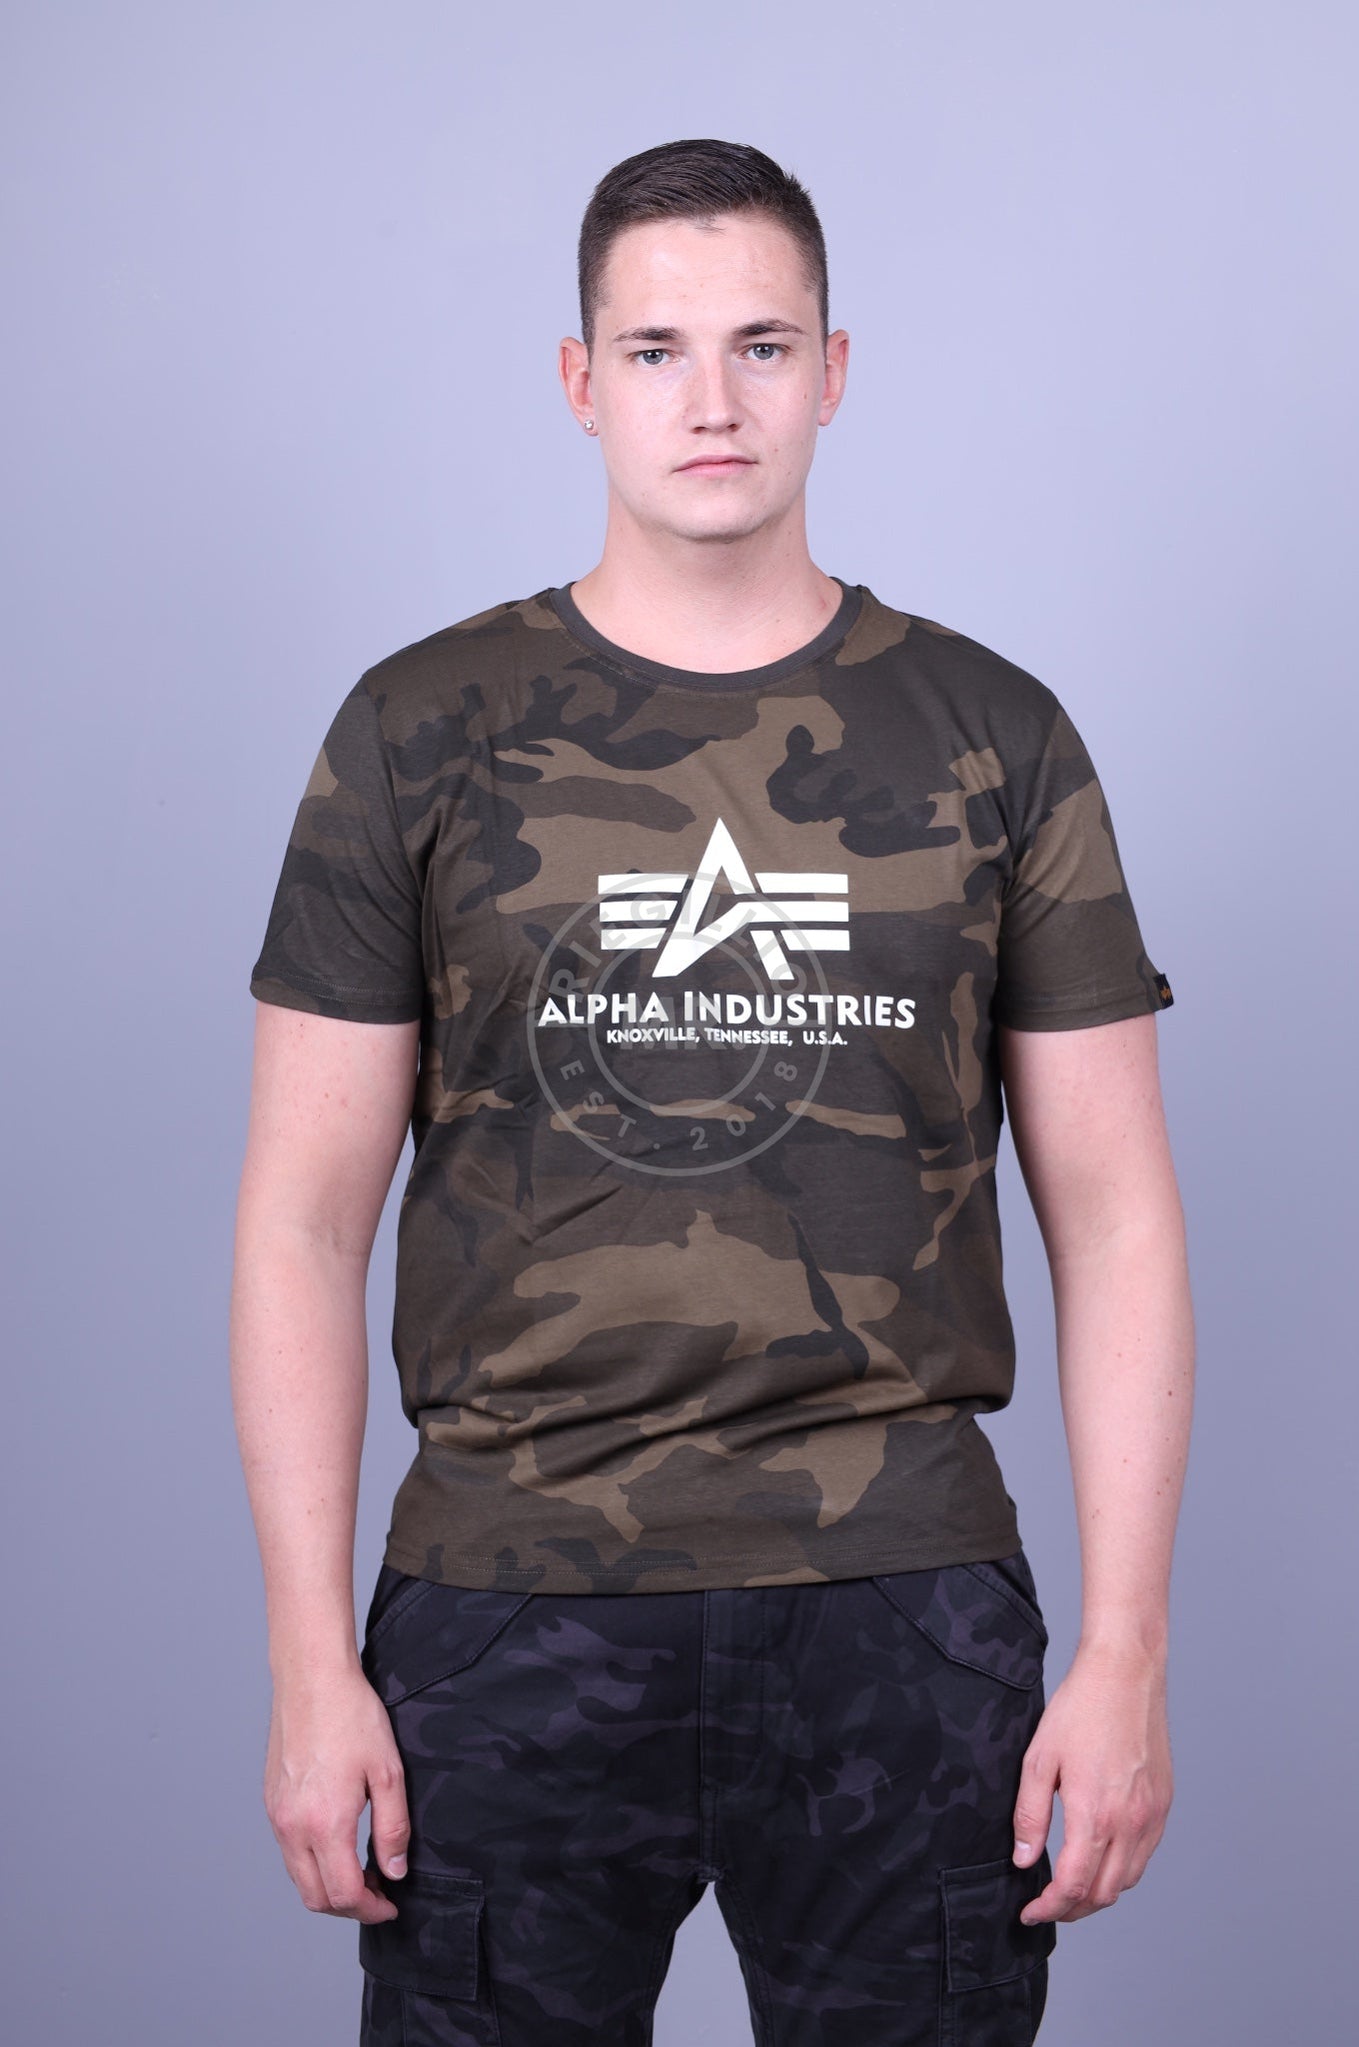 Alpha Industries Basic T-Shirt Camo at Black MR. Riegillio